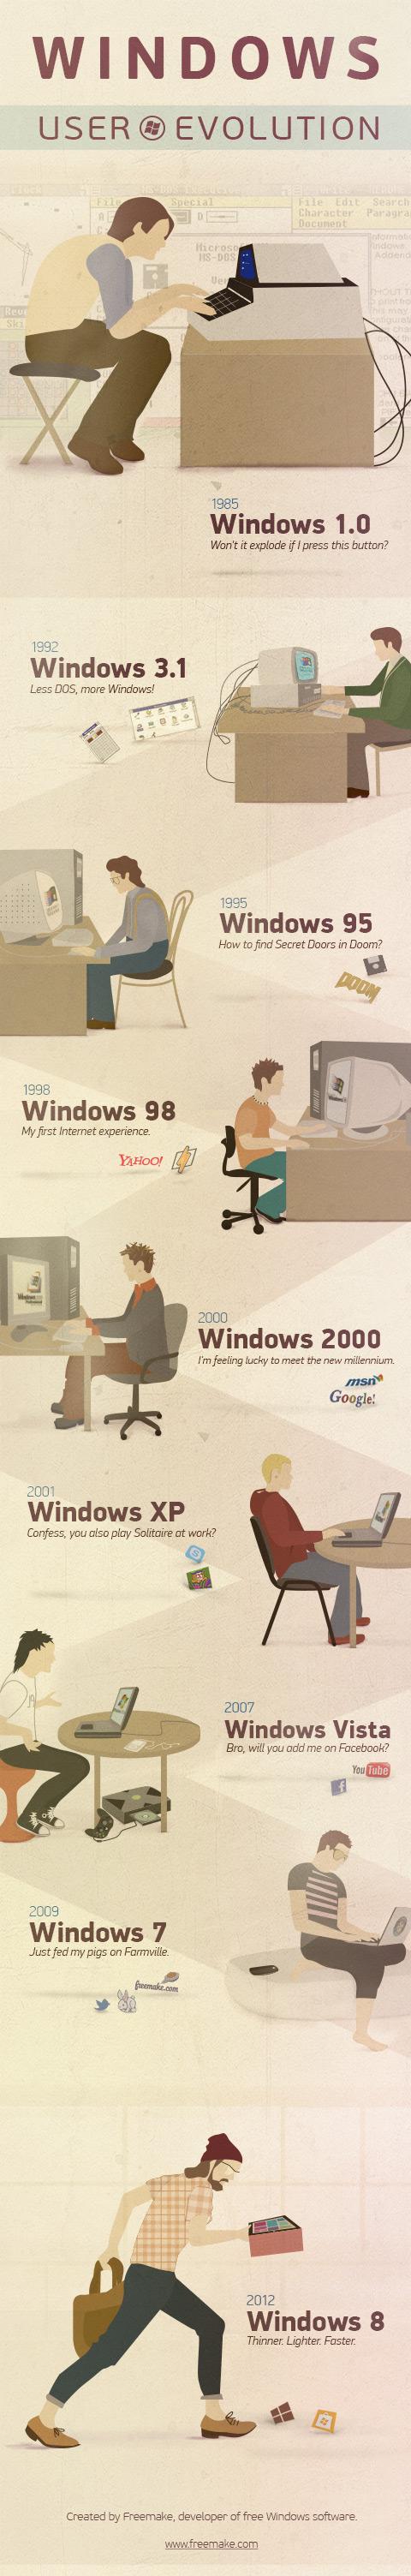 Windows User Evolution INFOGRAPHIC